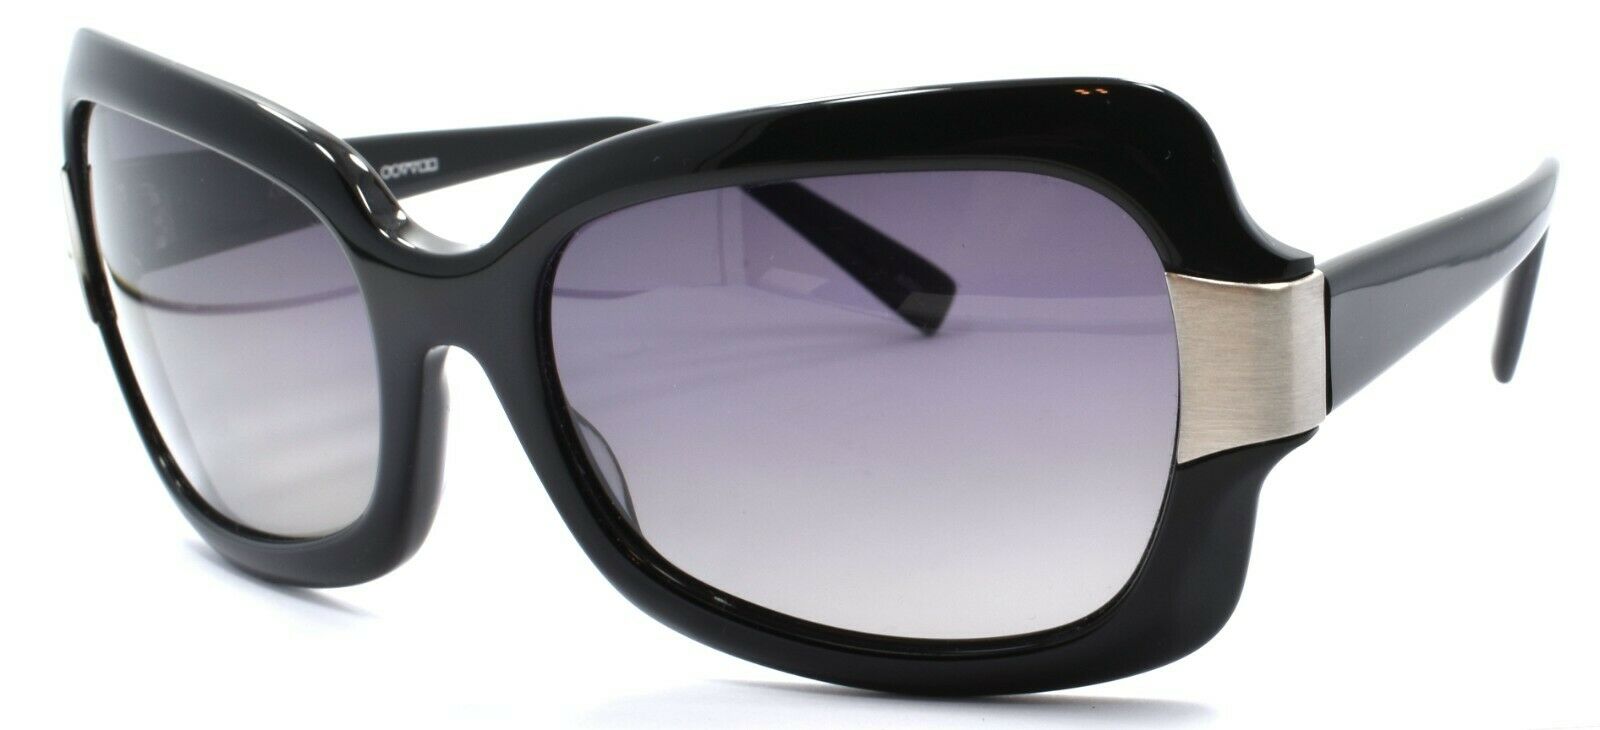 1-Oliver Peoples Vilette BK/S Women's Sunglasses Black / Violet Polarized JAPAN-Does not apply-IKSpecs